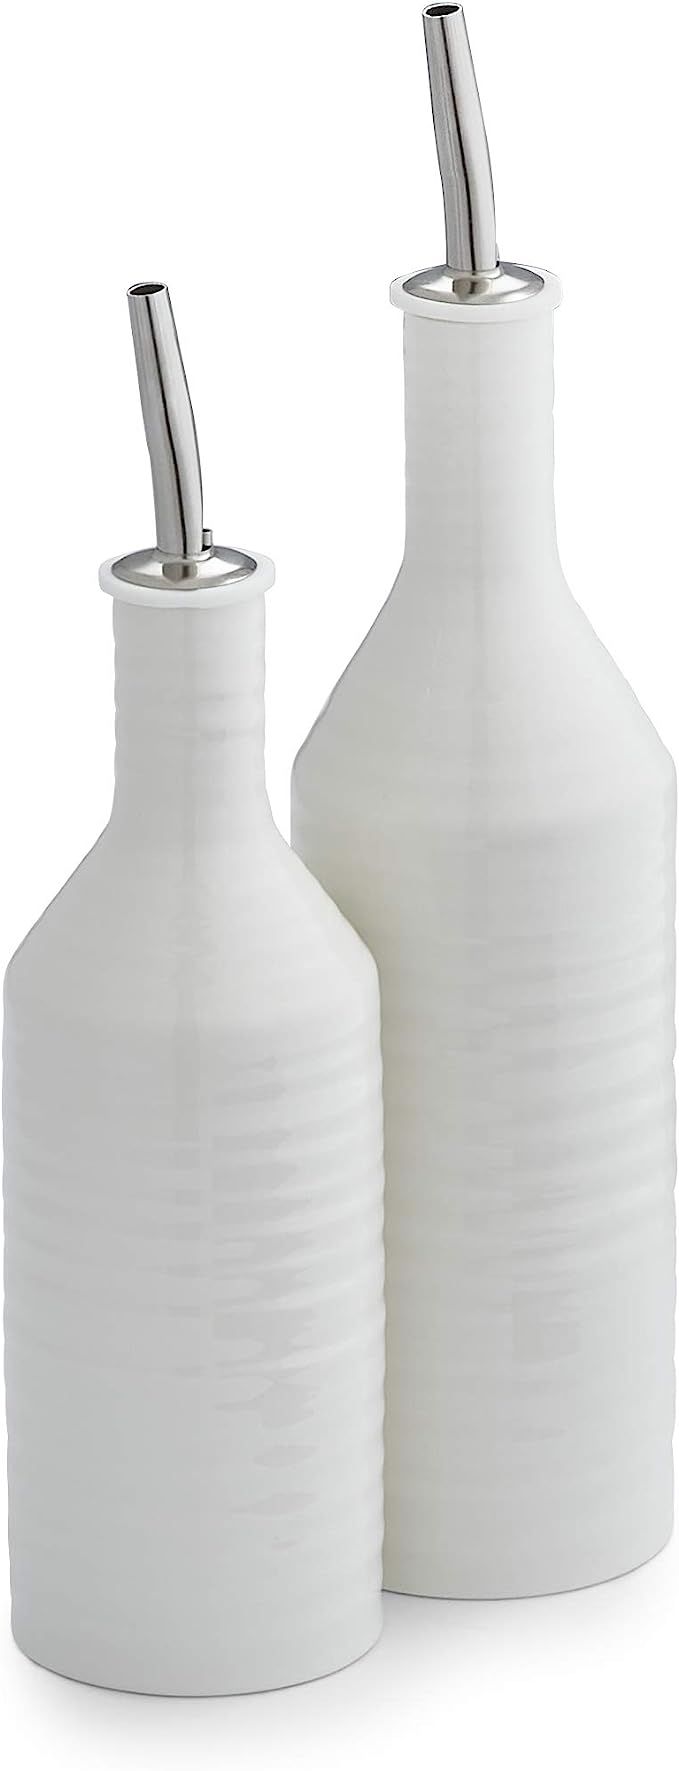 Portmeirion Sophie Conran Oil and Vinegar Drizzler Set, Porcelain, White, 7 x 7 x 26.5 cm | Amazon (US)